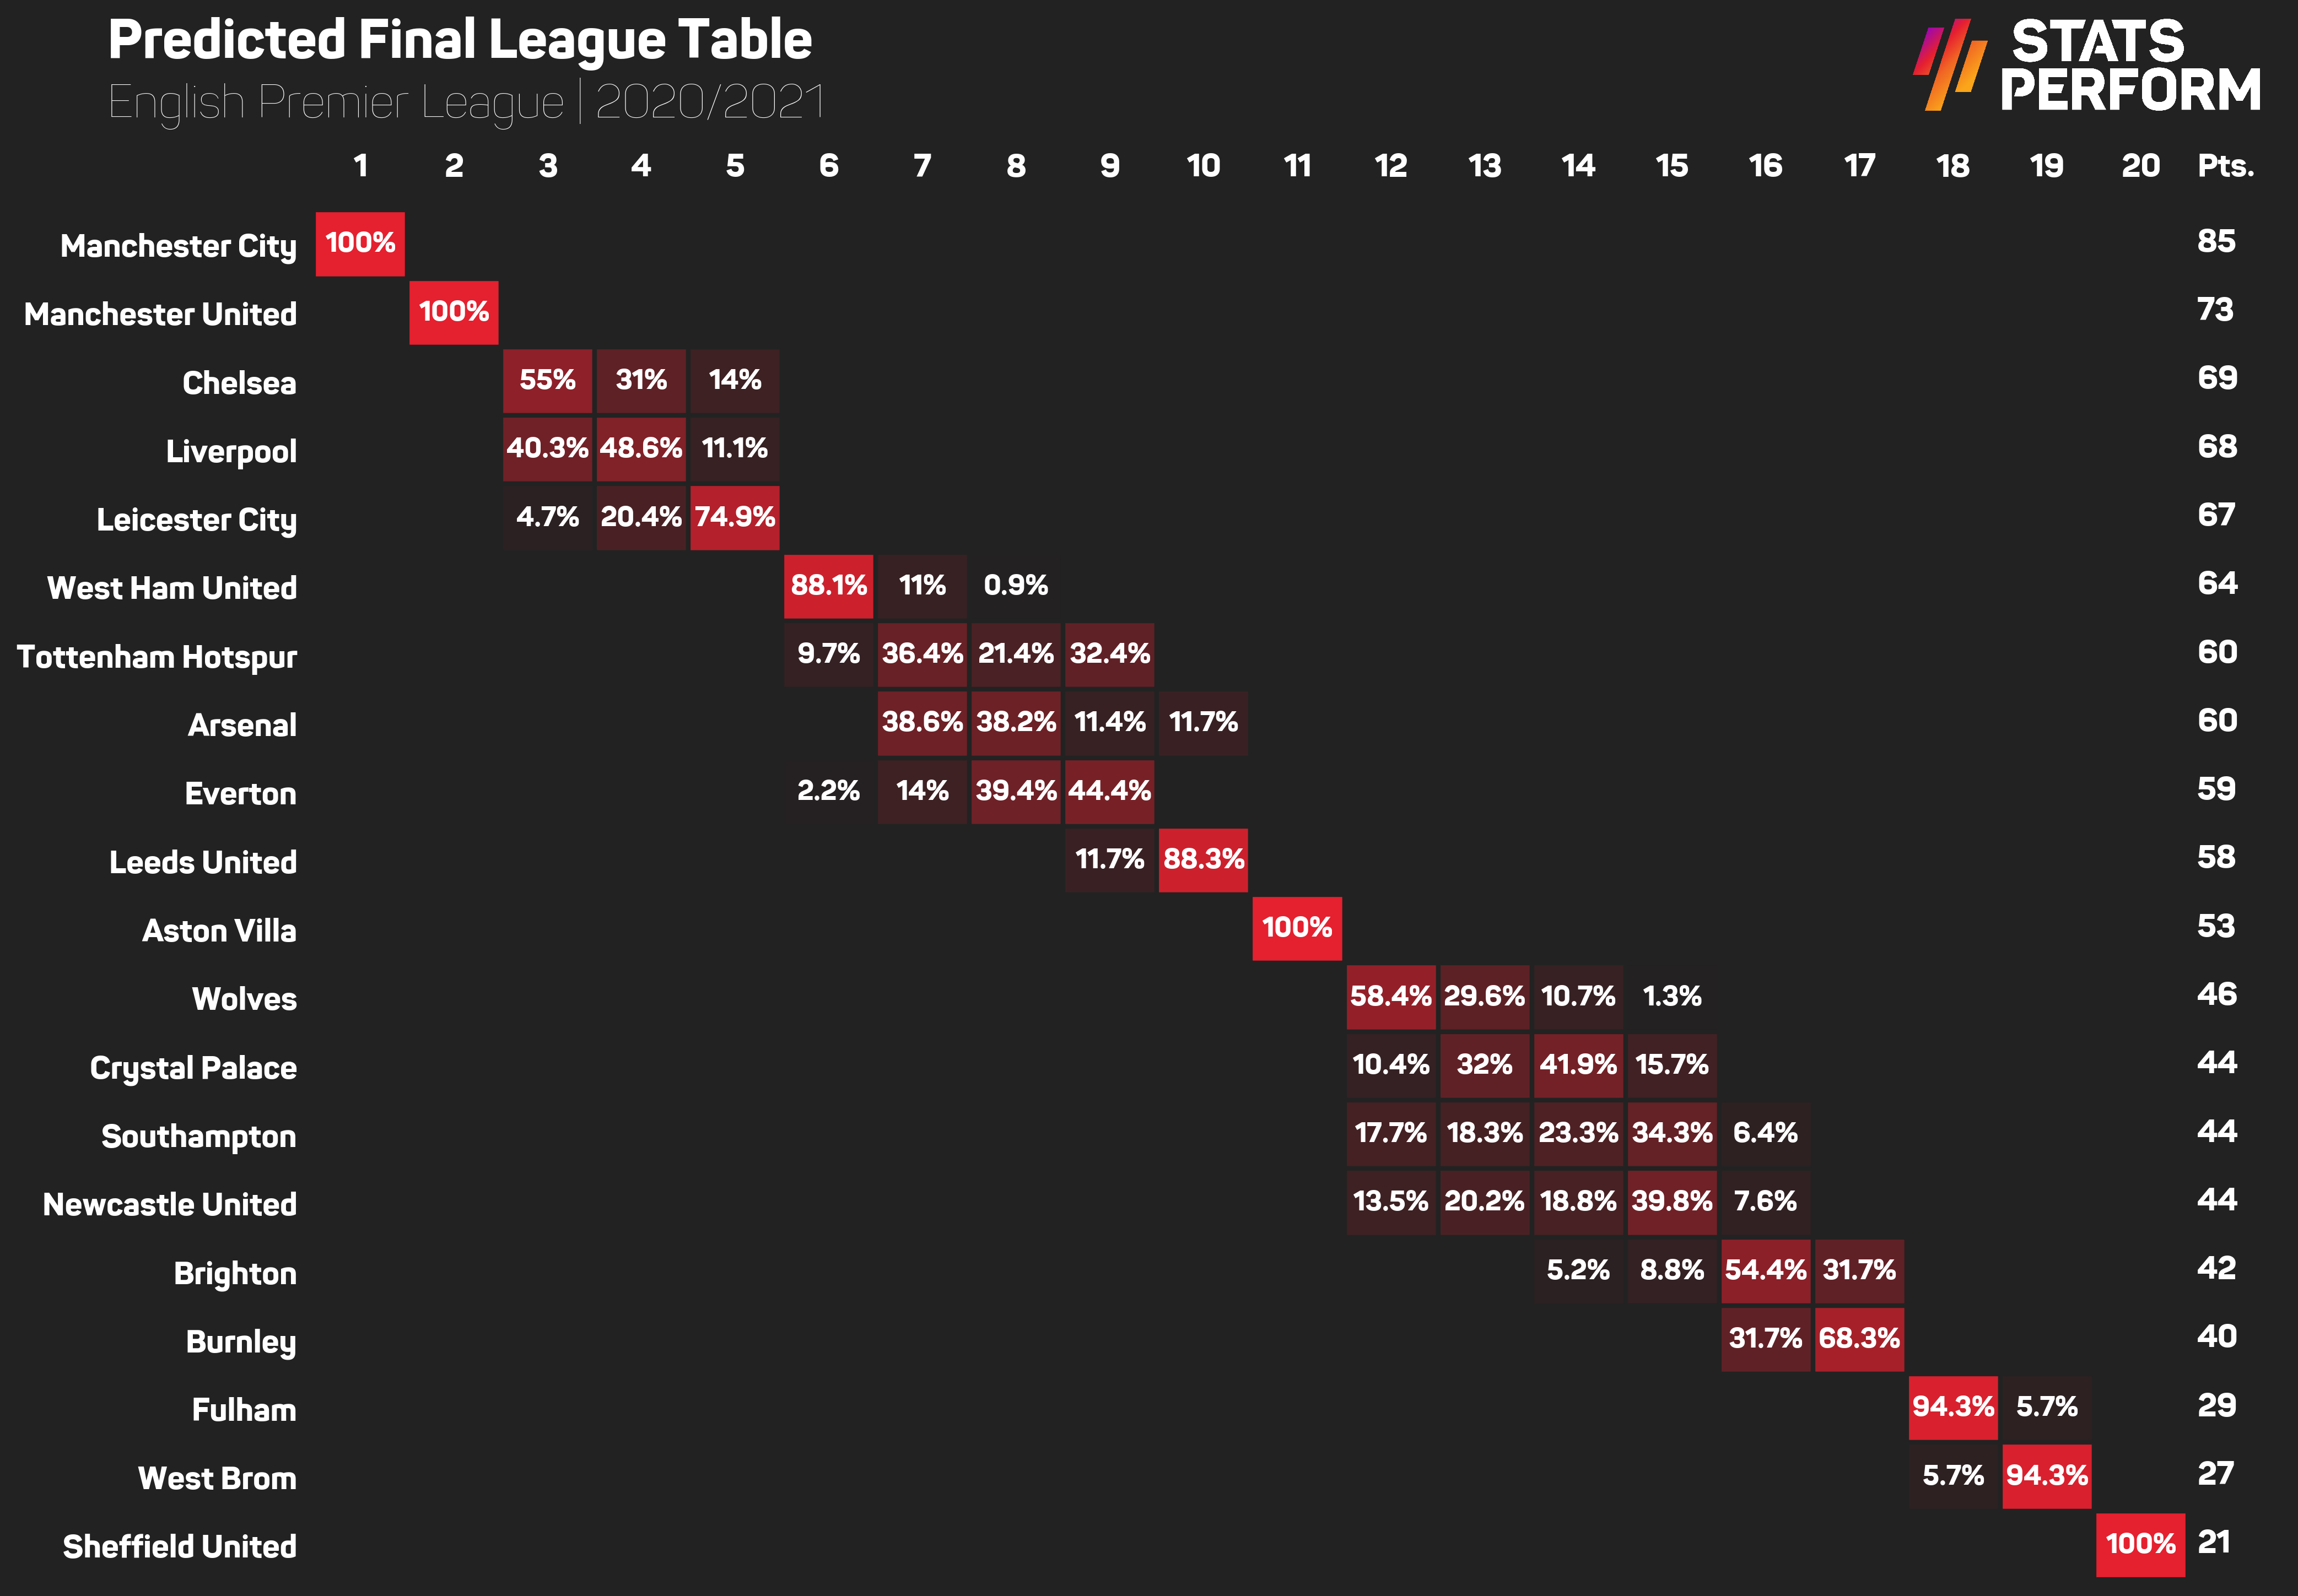 Premier League 2020-21 predicted final table